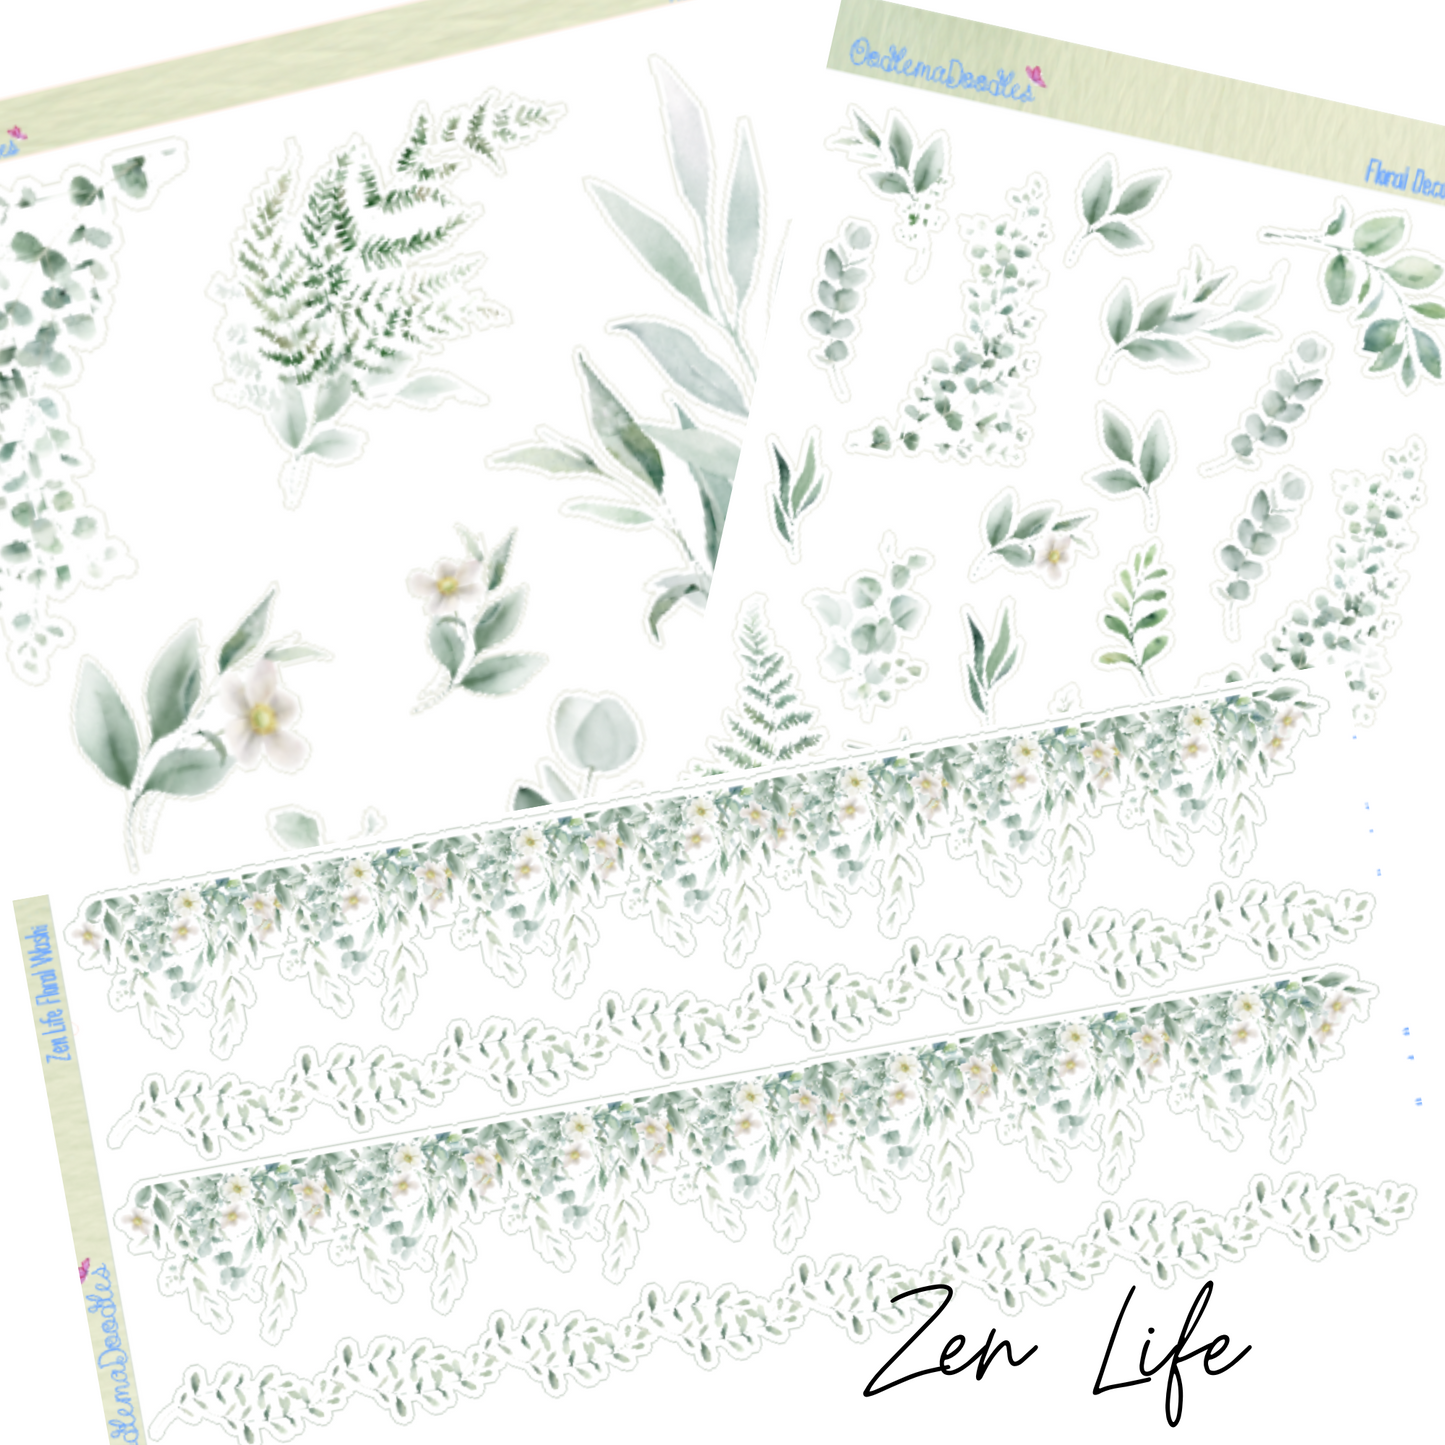 Zen Life Addon & Extra Washi Options